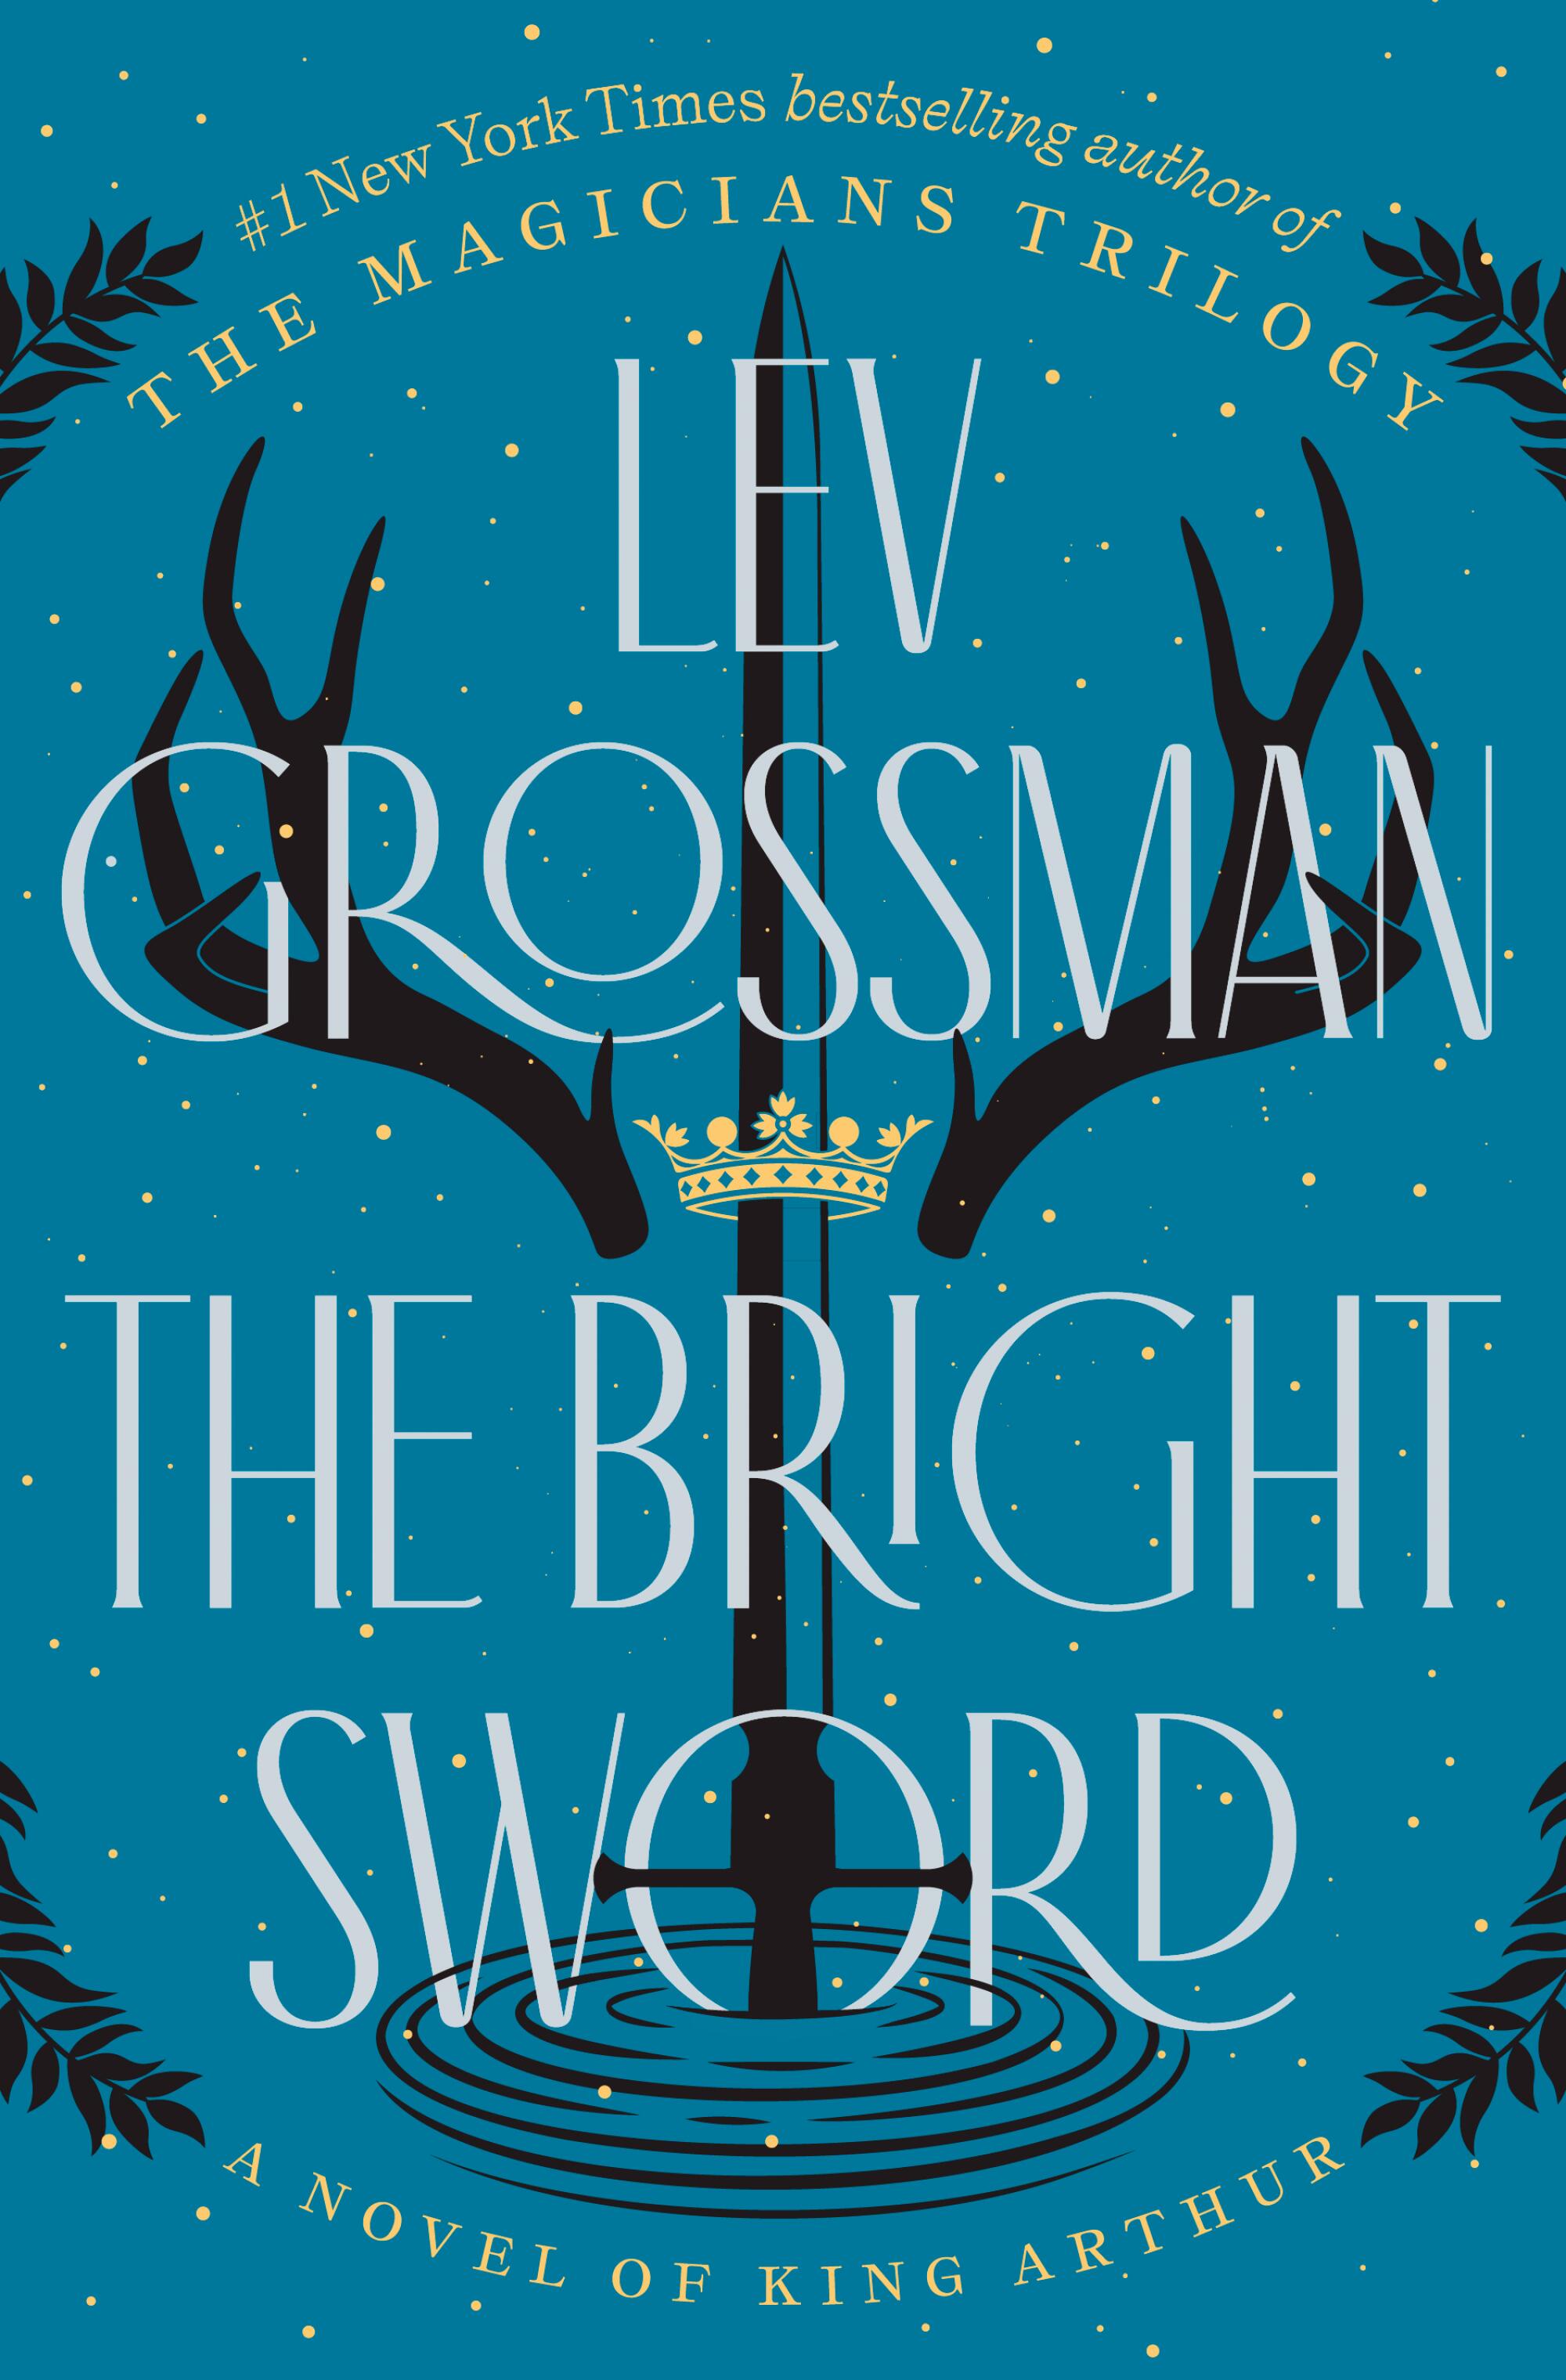 "The Bright Sword" by Lev Grossman